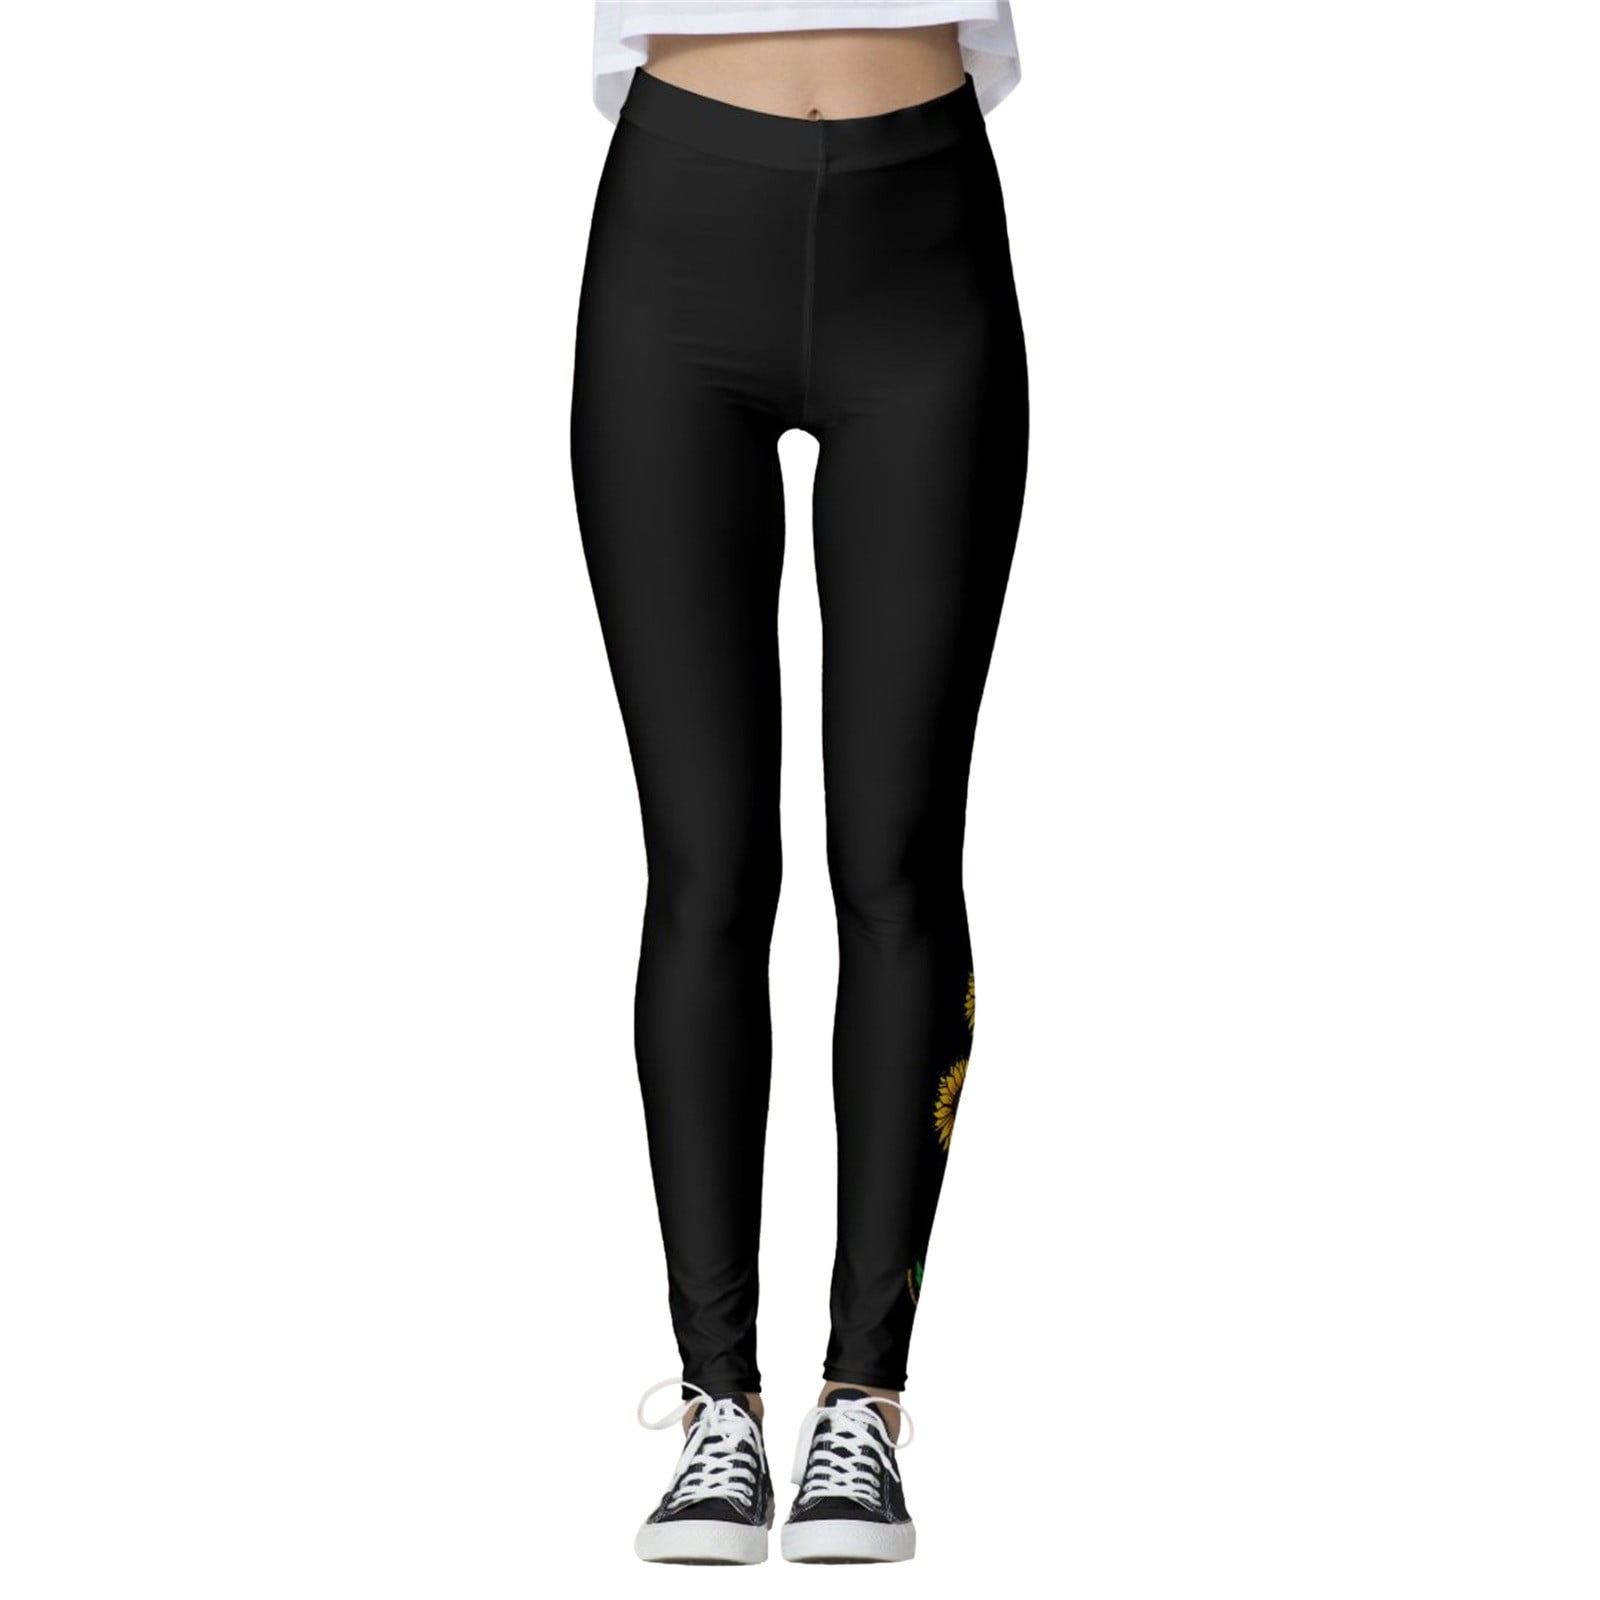 adviicd Yoga Pants For Girls Yoga Leggings Womens High Waist Solid Workout  Yoga pants With 2 Hidden Pockets Tight pants Black 2XL 